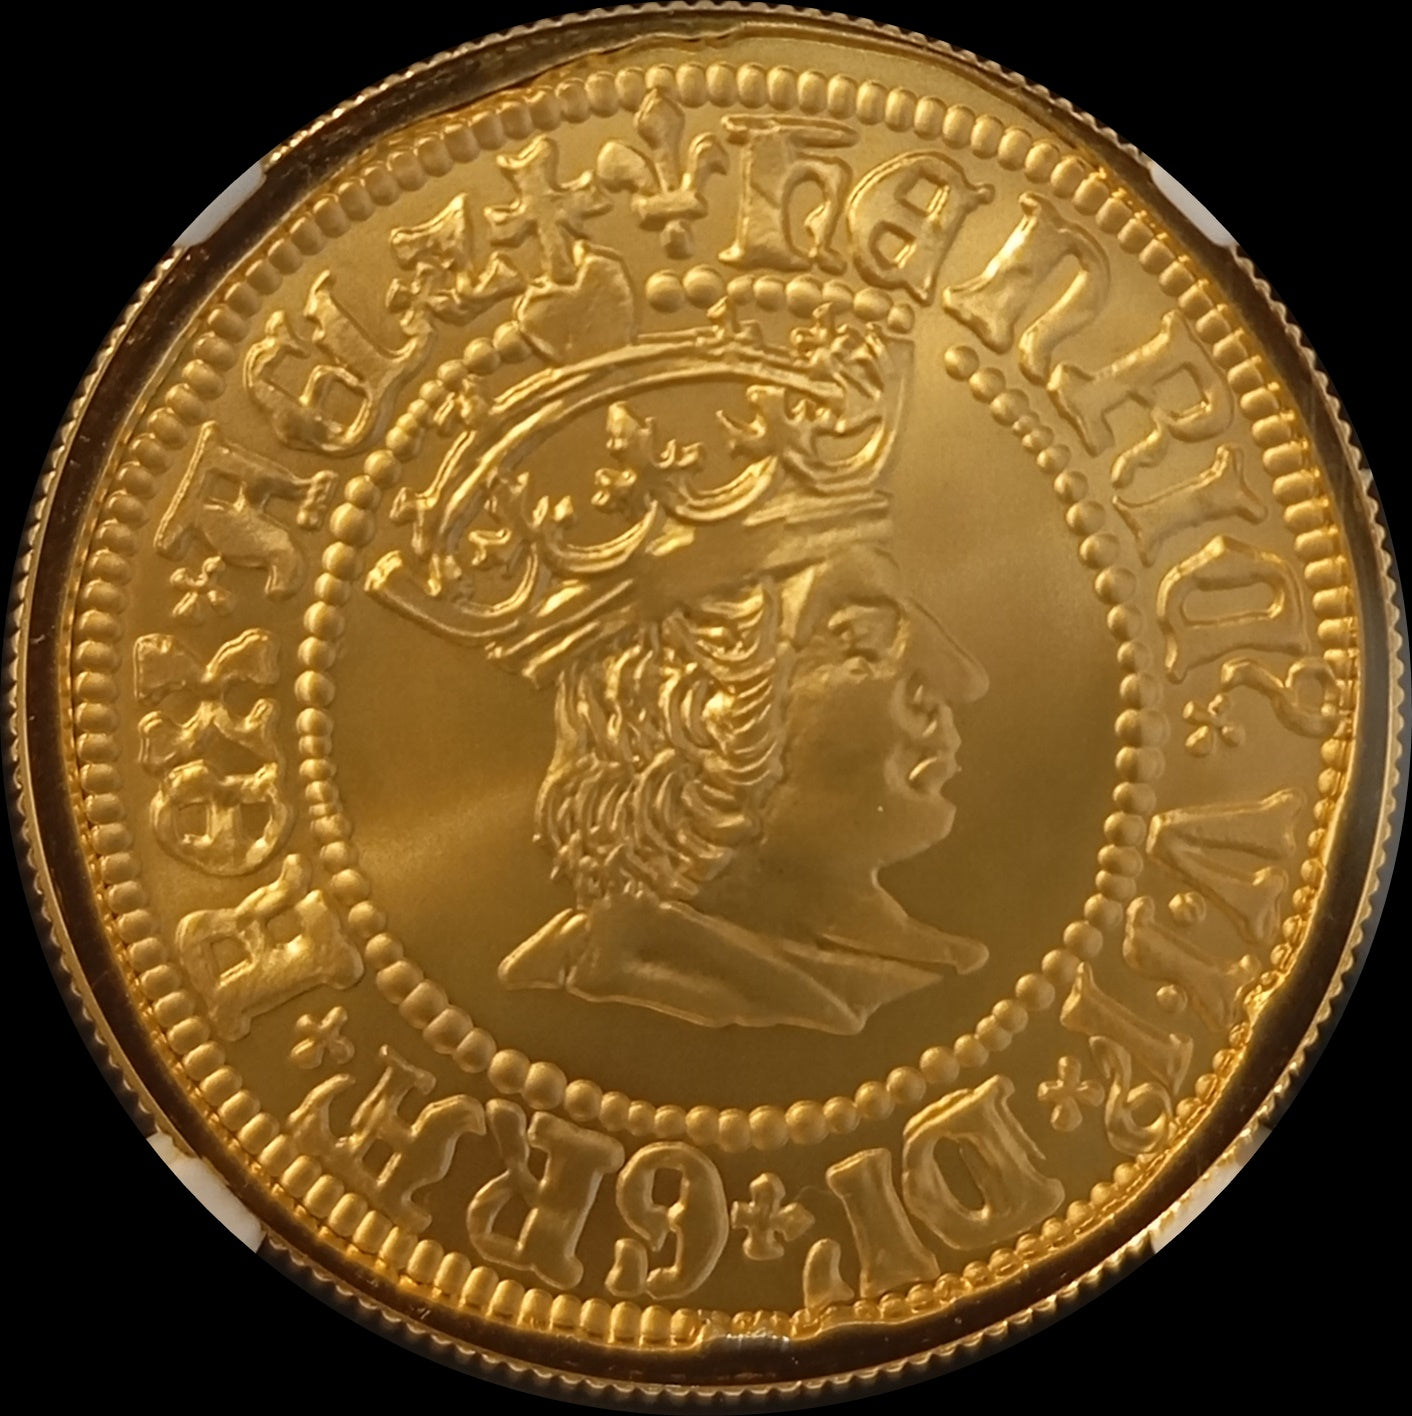 Henry VII, British Monarchs, 1 Oz Gold 100 £, Proof NGC PF 70, 2022